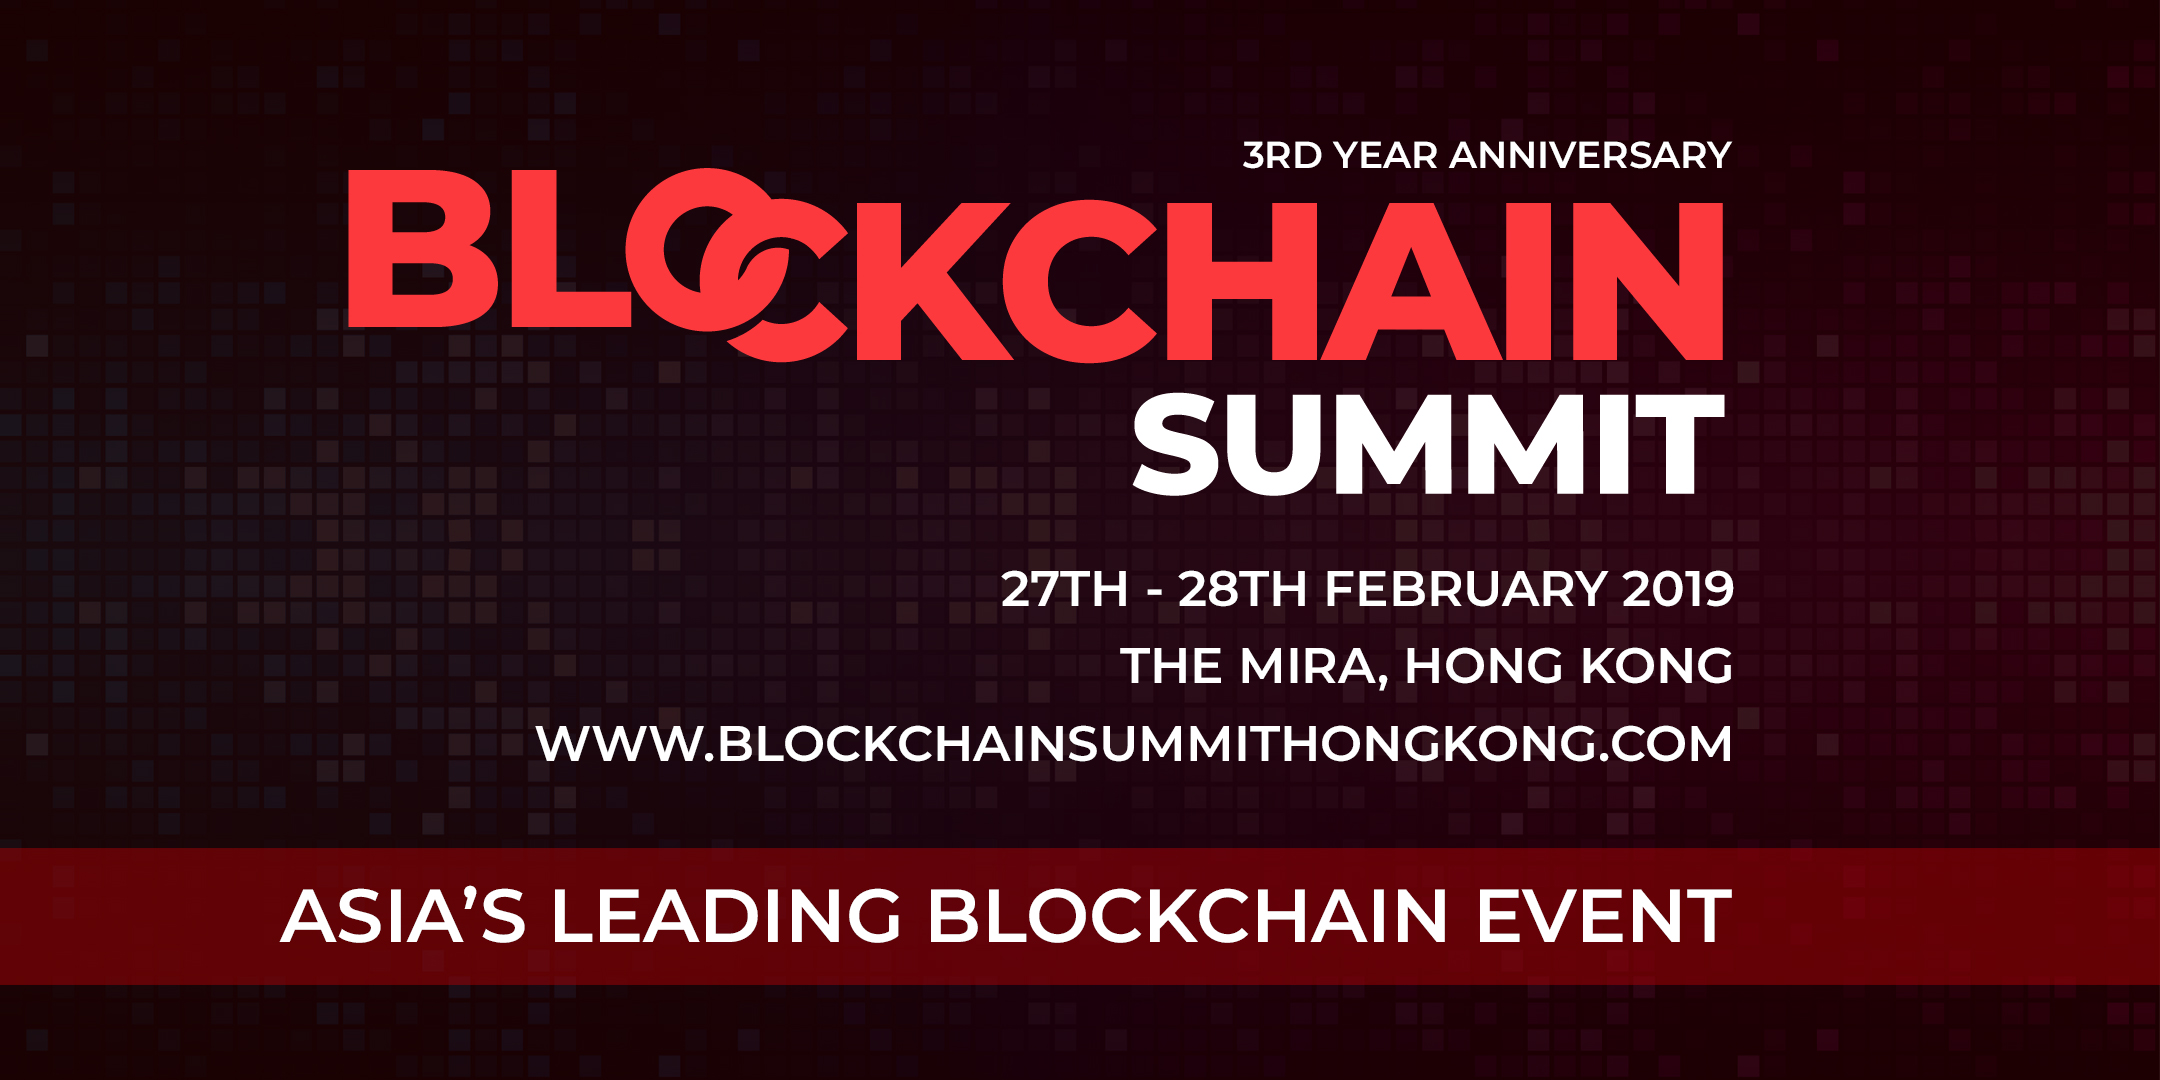 Blockchain Summit Hong Kong organized by Blockchain Summit Series